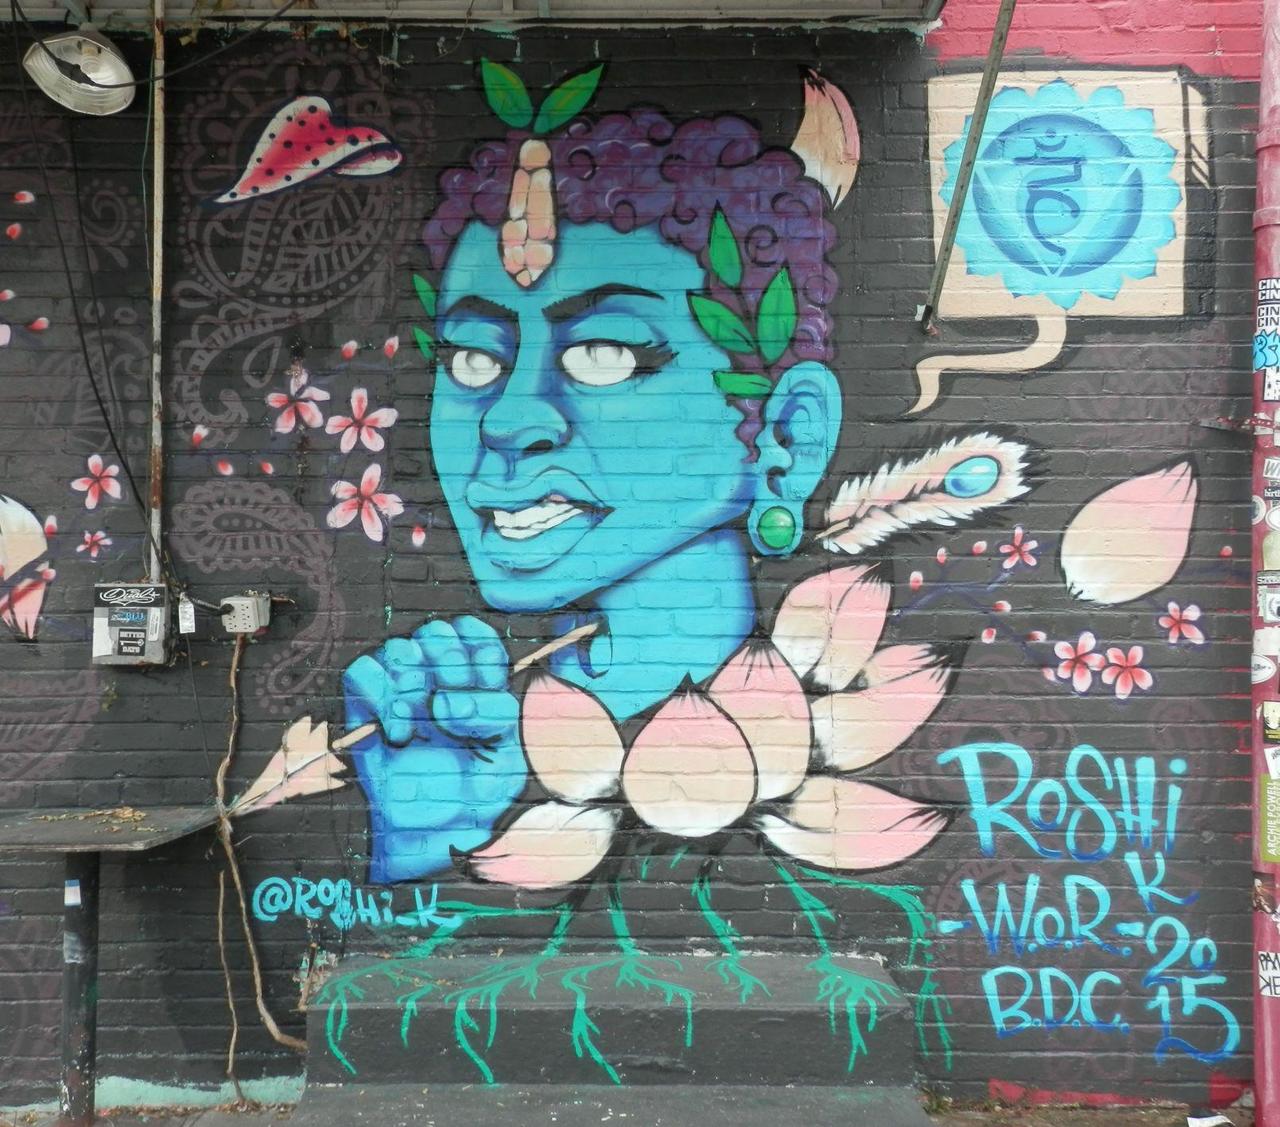 #Houston #Graffiti #Streetart Roshi's completed work for Meeting of Styles 2015. http://t.co/IlpyDZhSu8